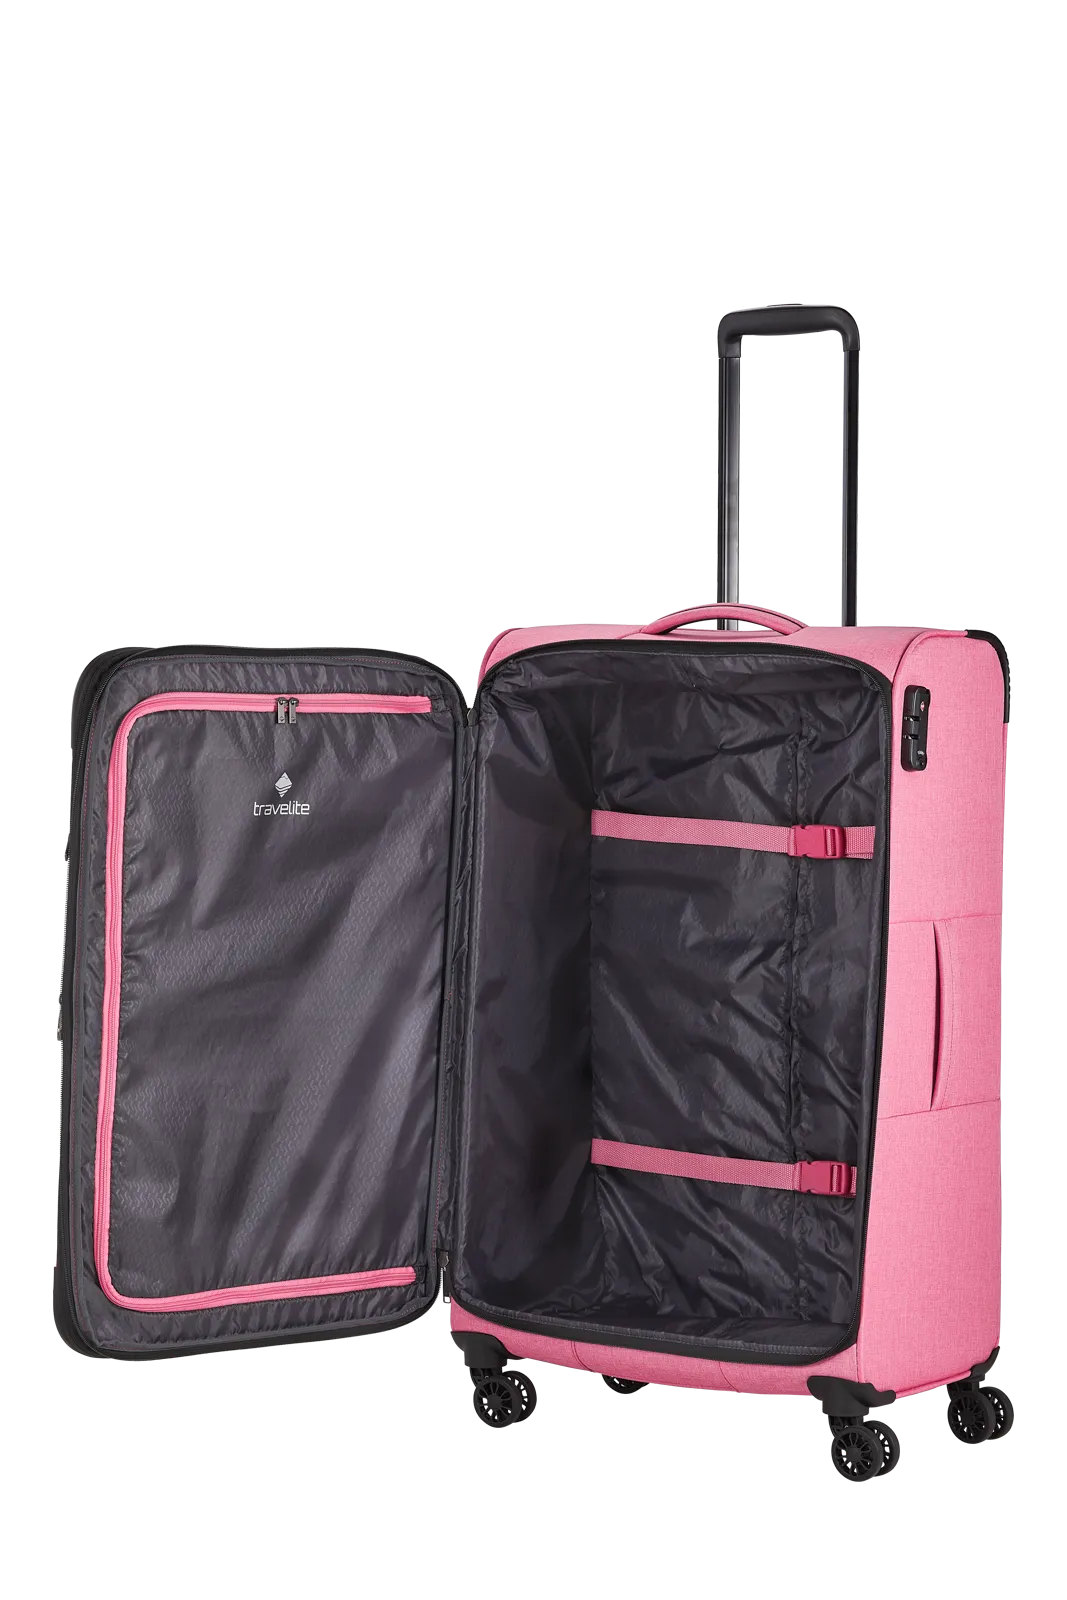 3-pieces luggage set